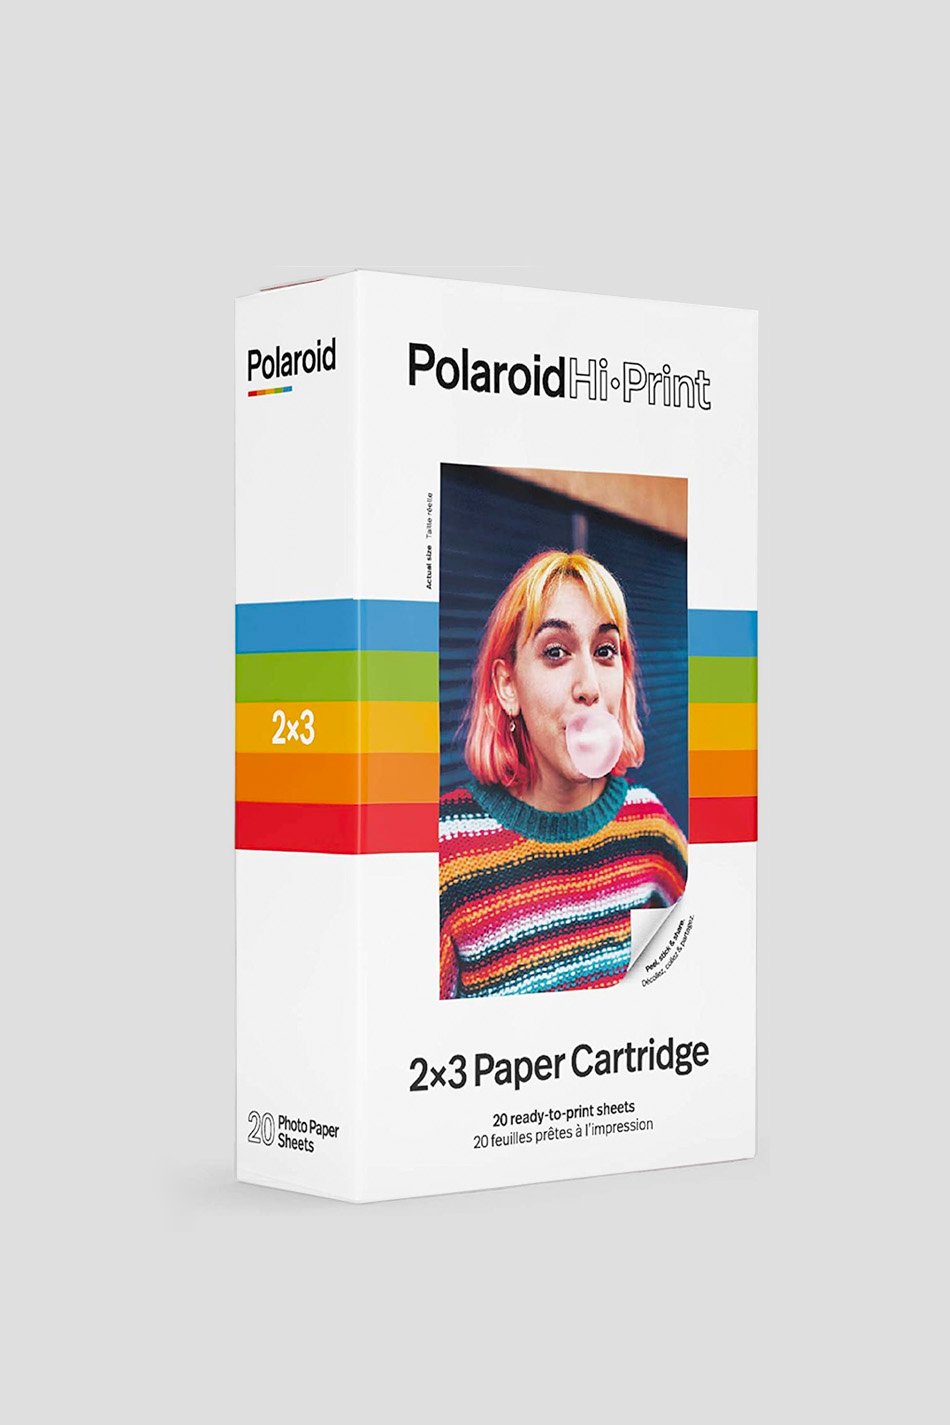 Polaroid Hi·Print 2x3 Paper